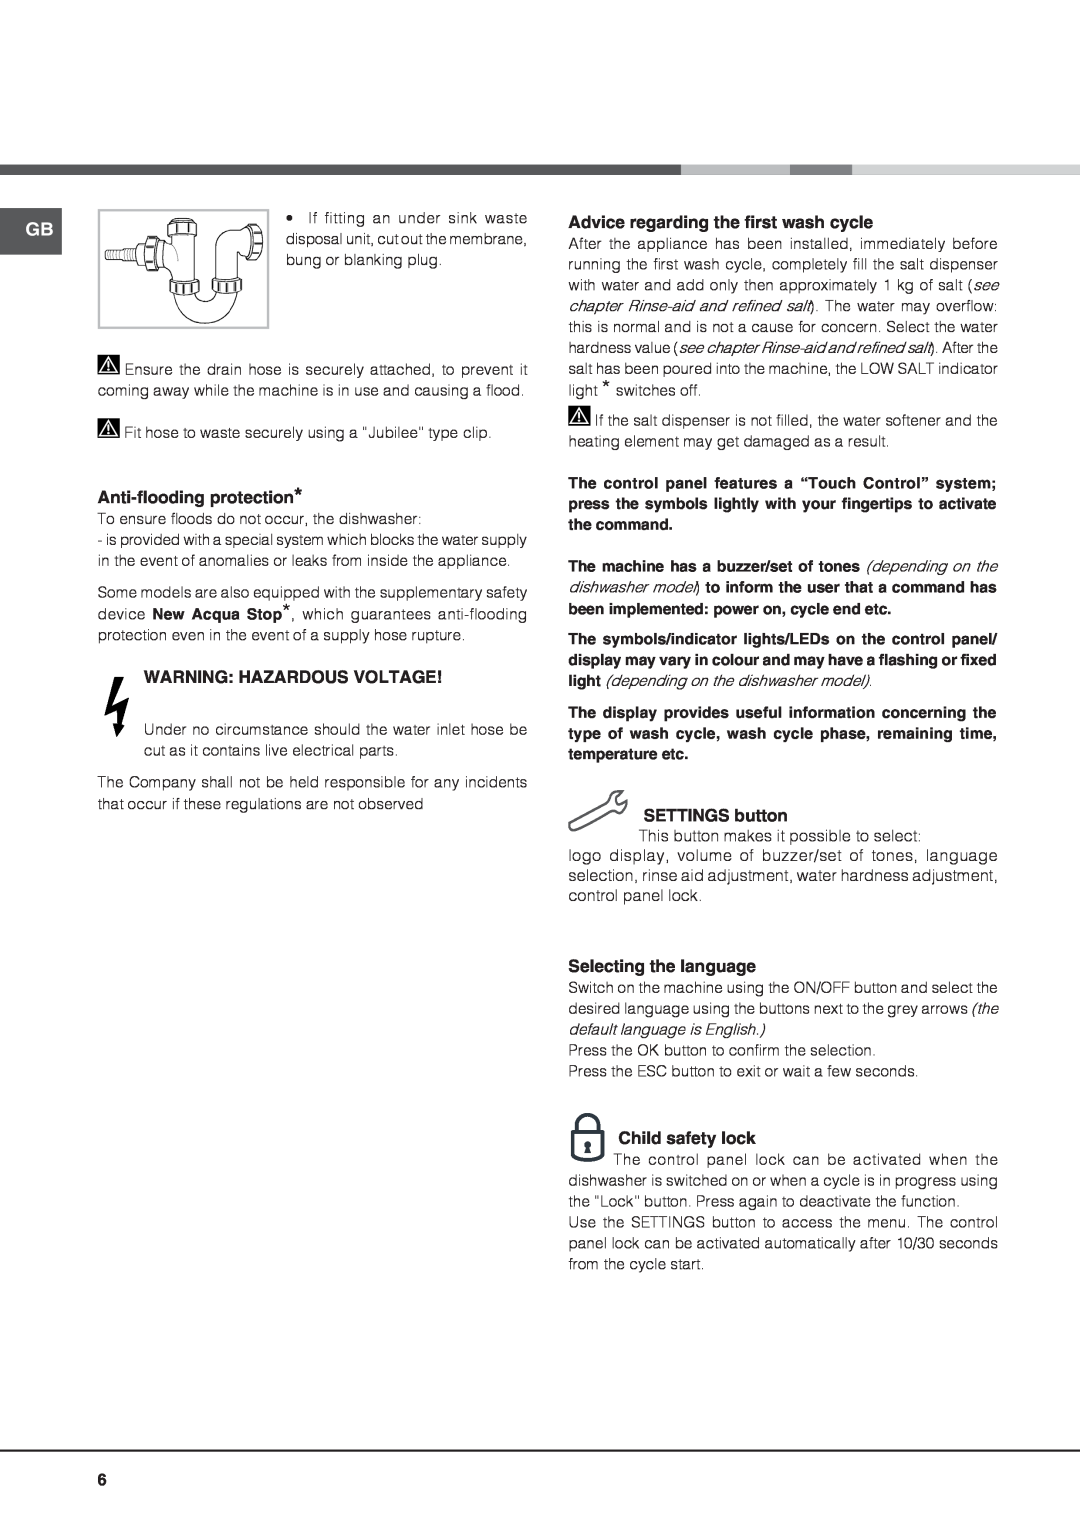 Hotpoint FDUD 44110 ULTIMA manual Anti-floodingprotection, Warning Hazardous Voltage, Advice regarding the first wash cycle 